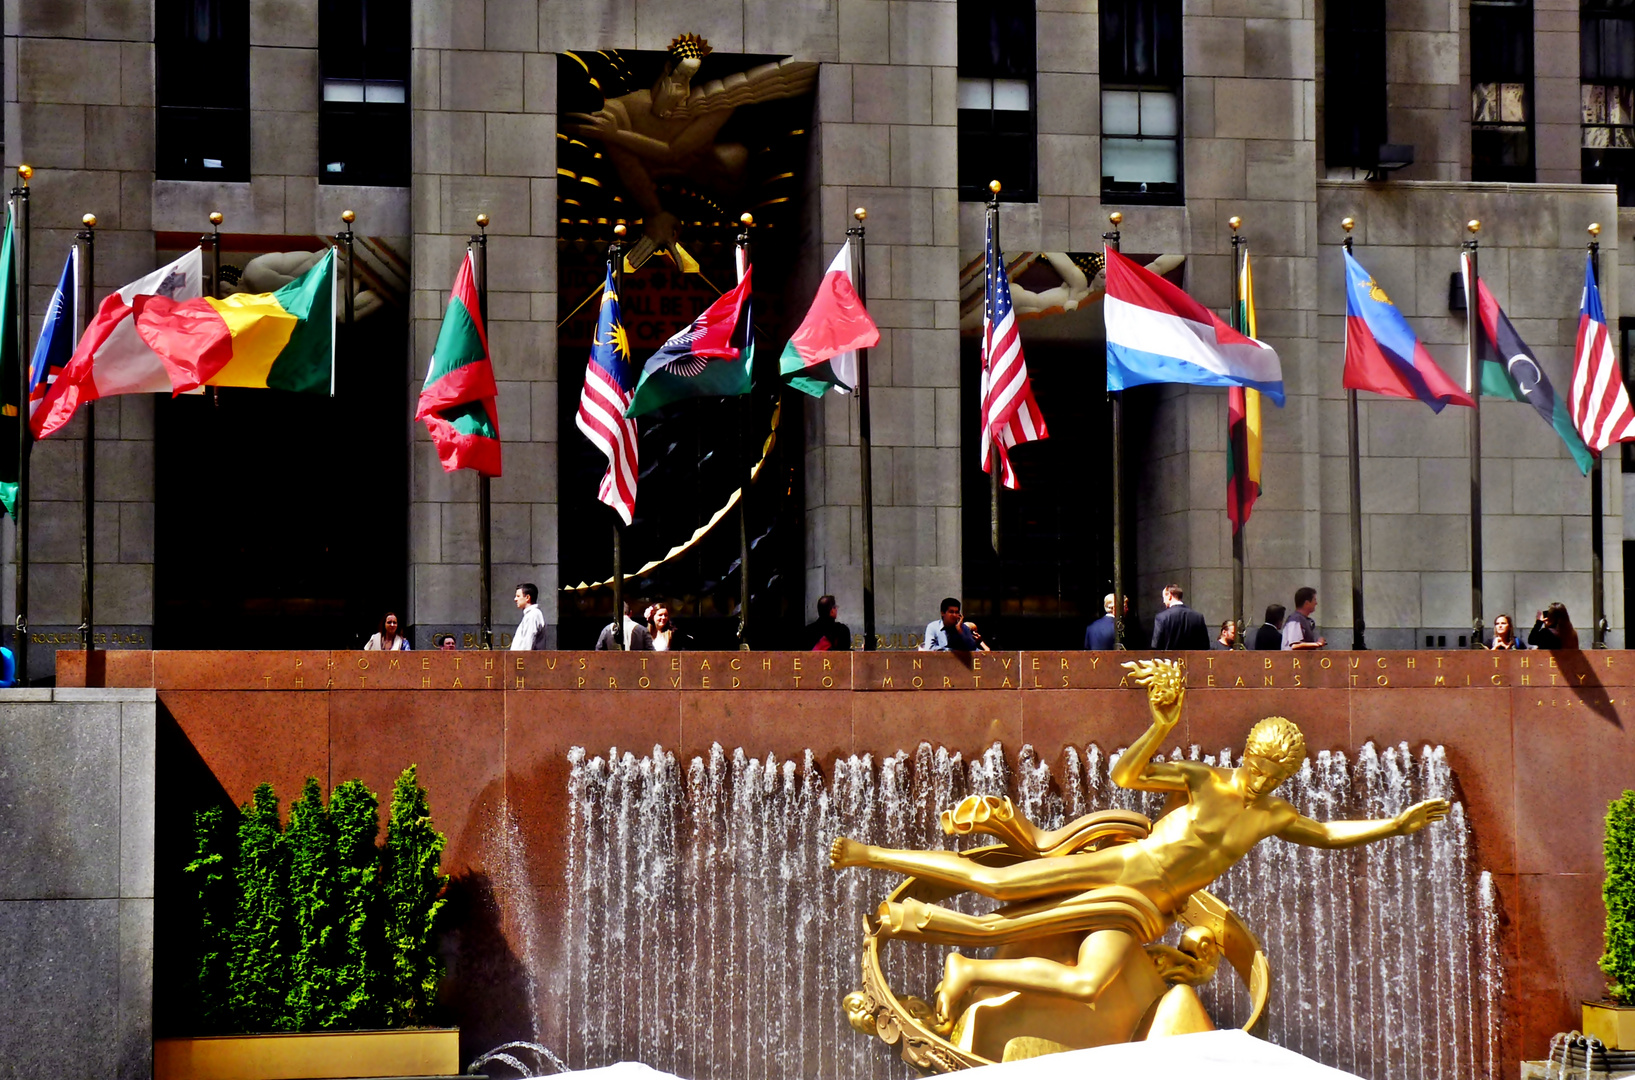 NYC Rockefeller Center - Prometheus-Statue